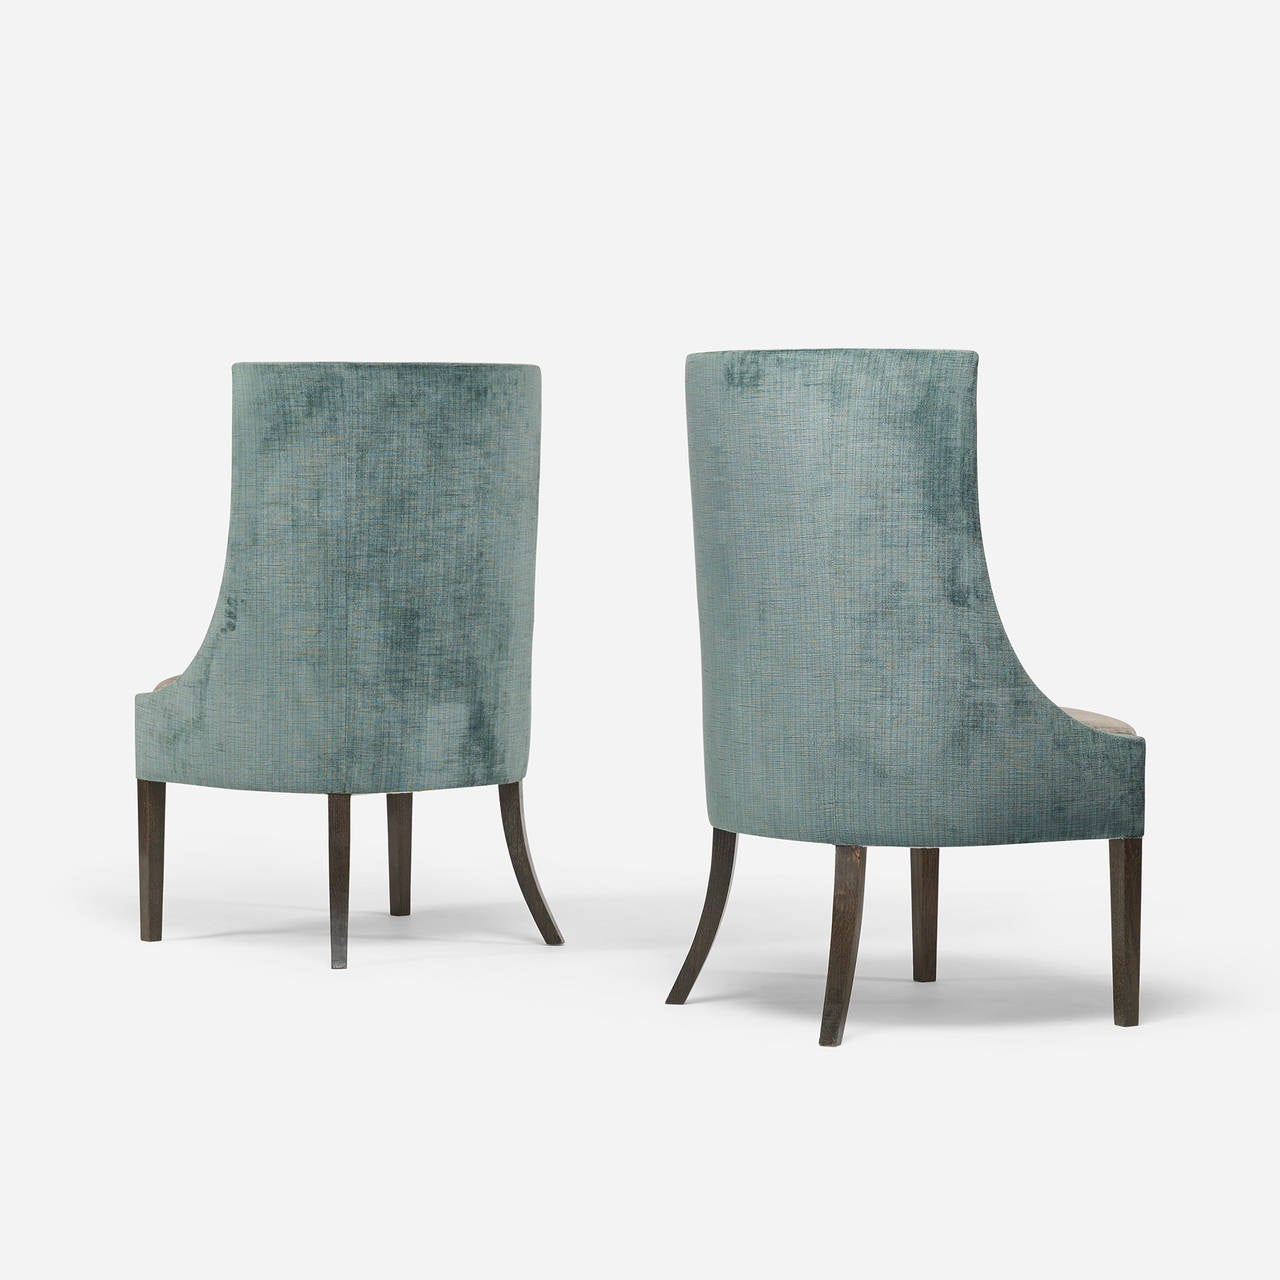 La Gondola chairs, pair by Chahan Minassian.